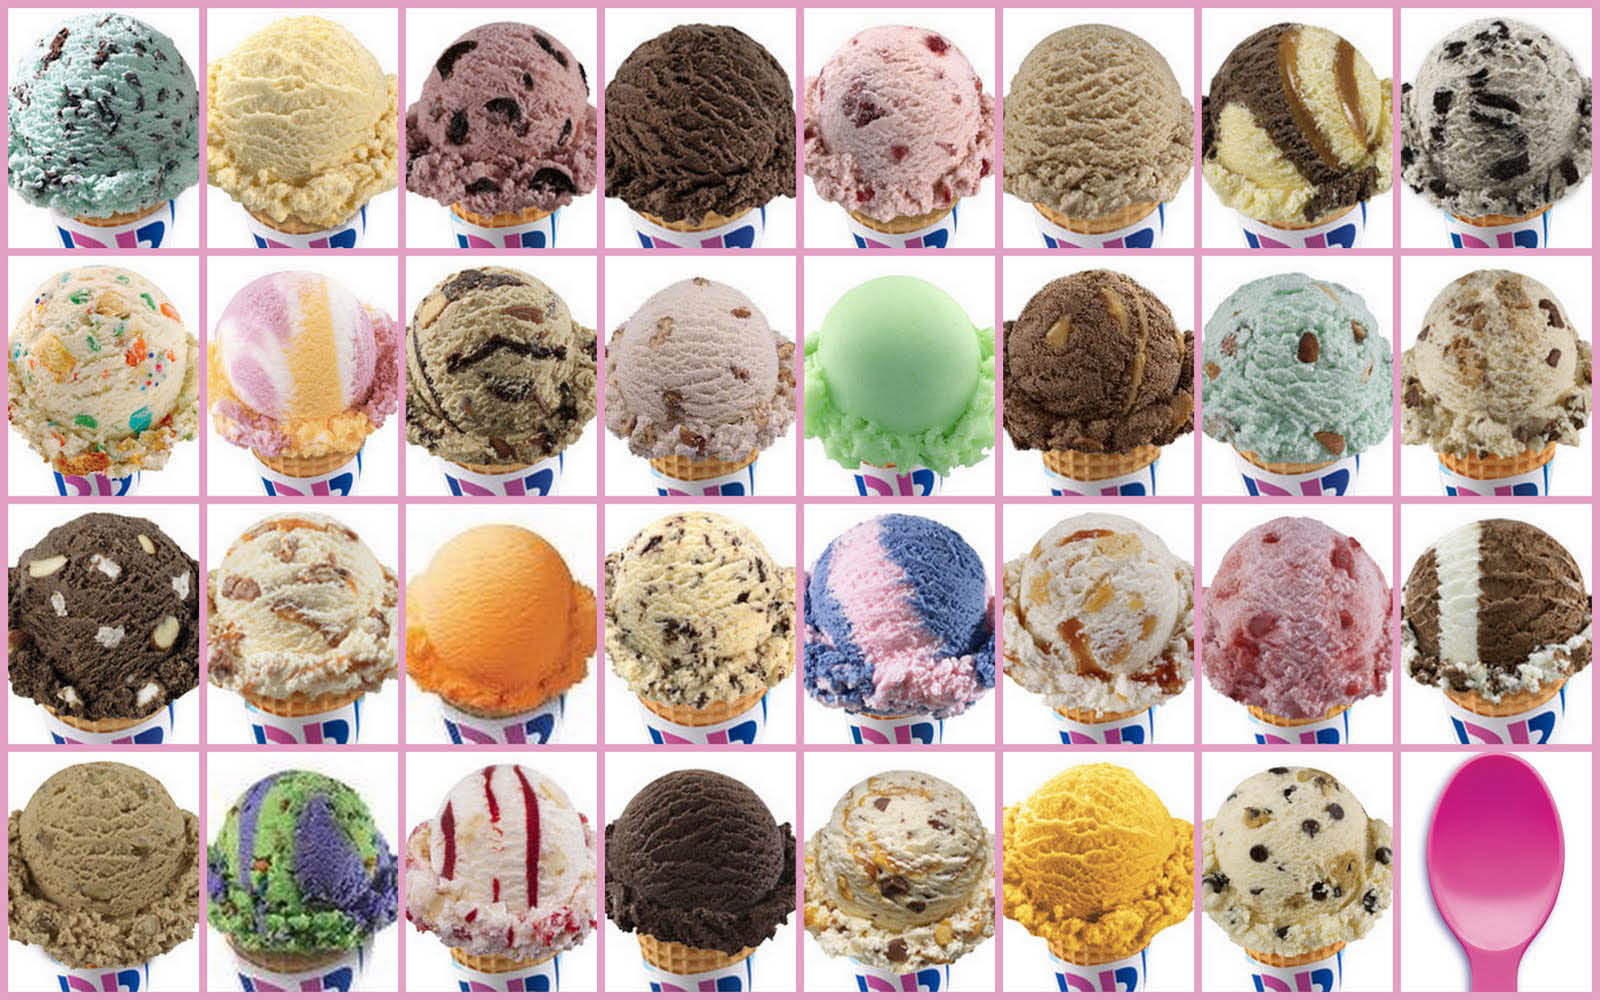 Baskin-Robbins Ice Cream Flavors